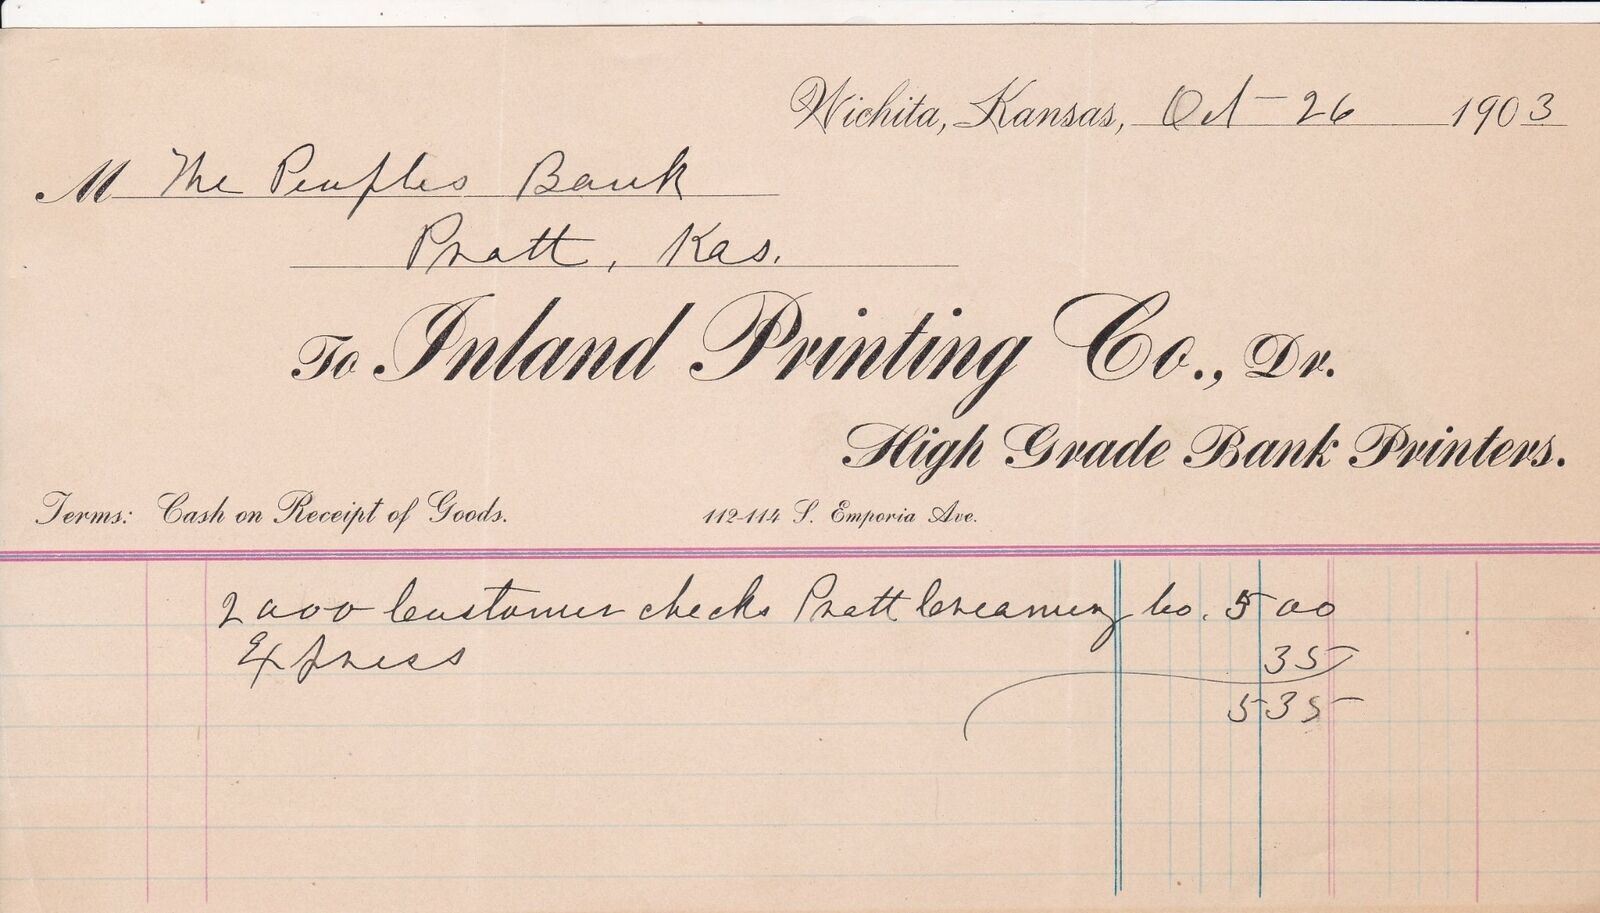 U.S. INLAND PRINTING CO. High Grade Bank Printers 1903 Headed Invoice Ref 44513